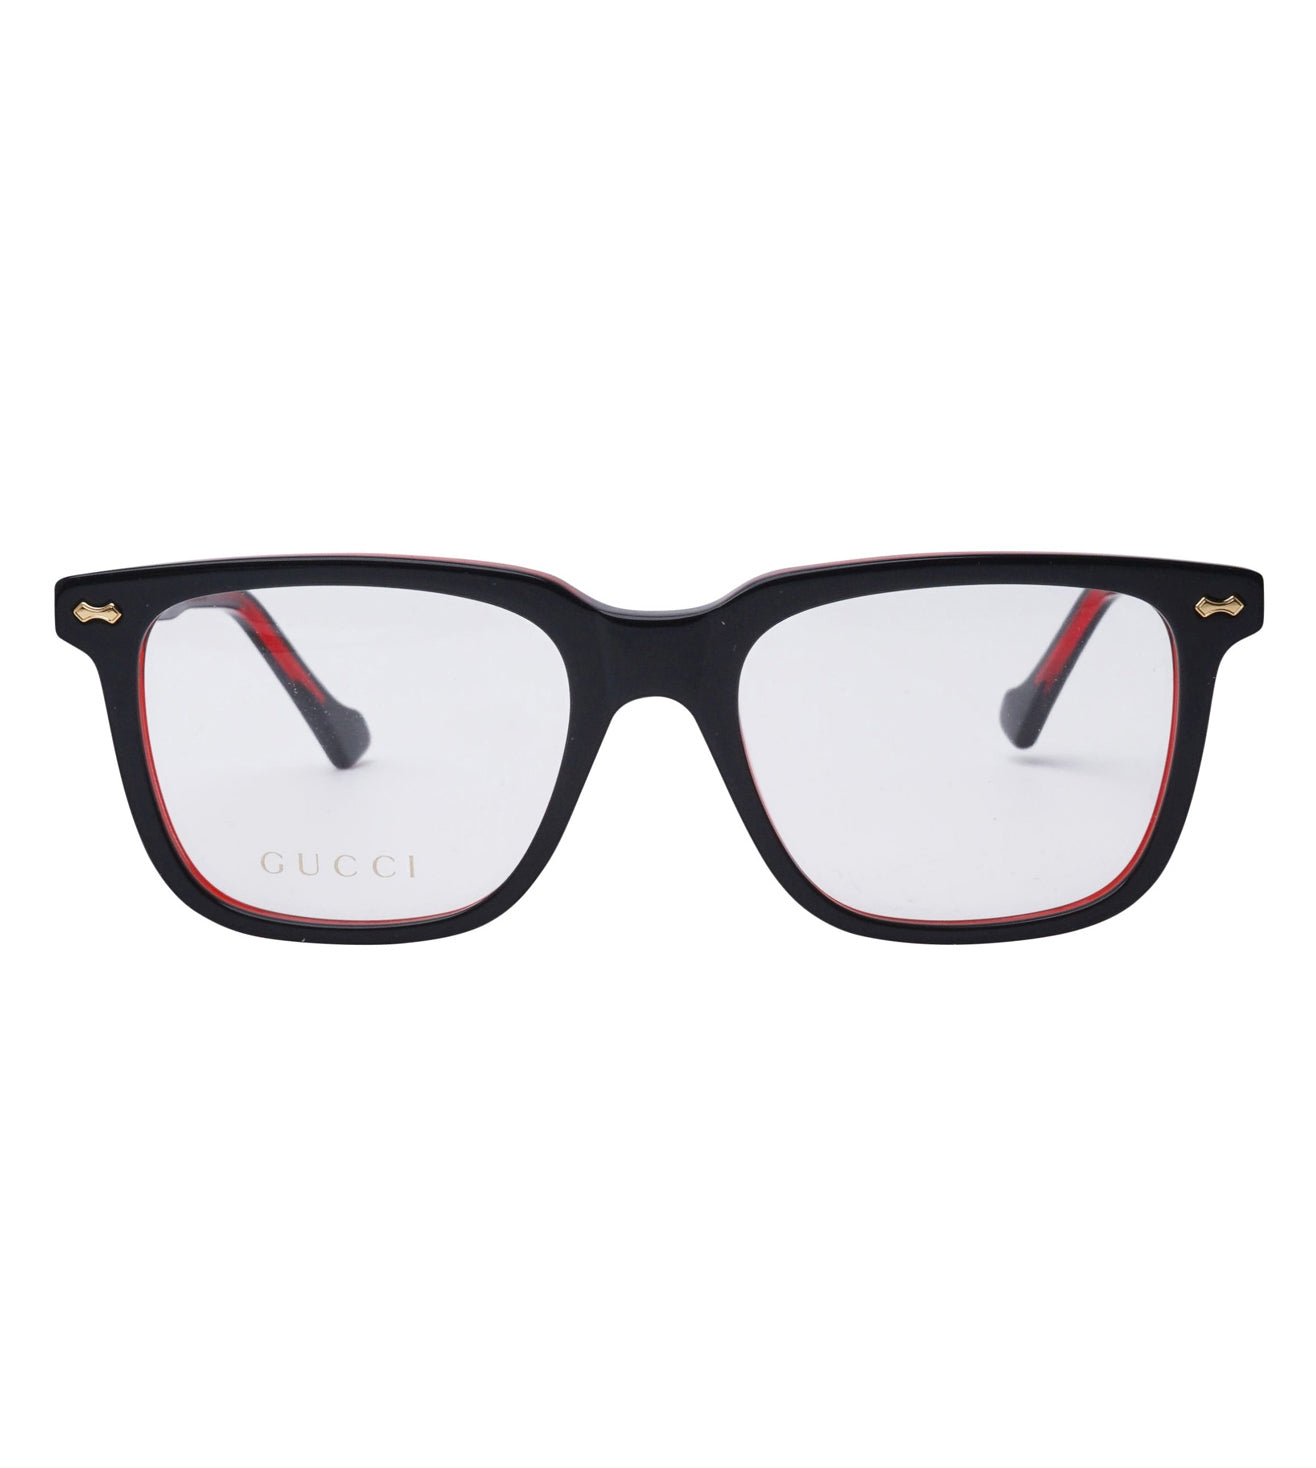 Gucci Men's Black & Red Square Optical Frame